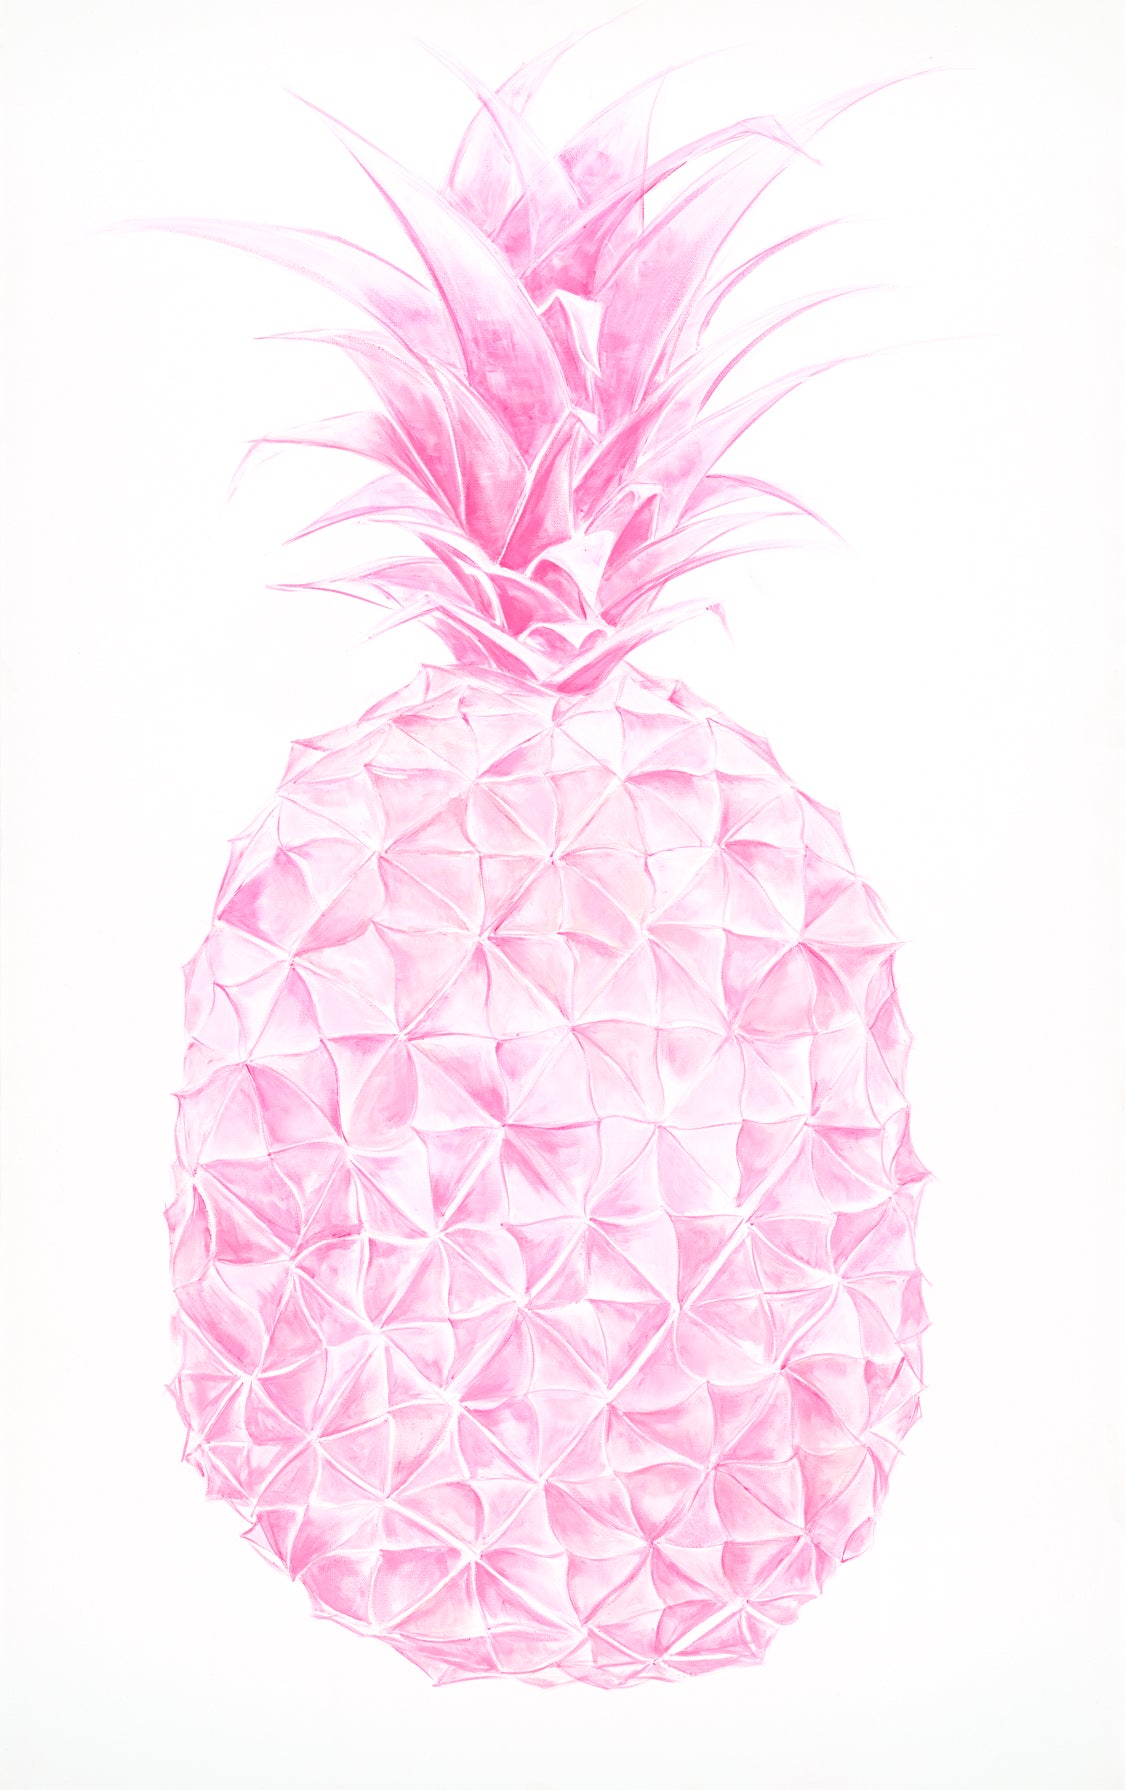 Elisabeth Hasselbeck print of "Pink Pineapple"on UltraSmooth Fine Art Paper 30" x 48" from Chromatics (Nashville, Tn)